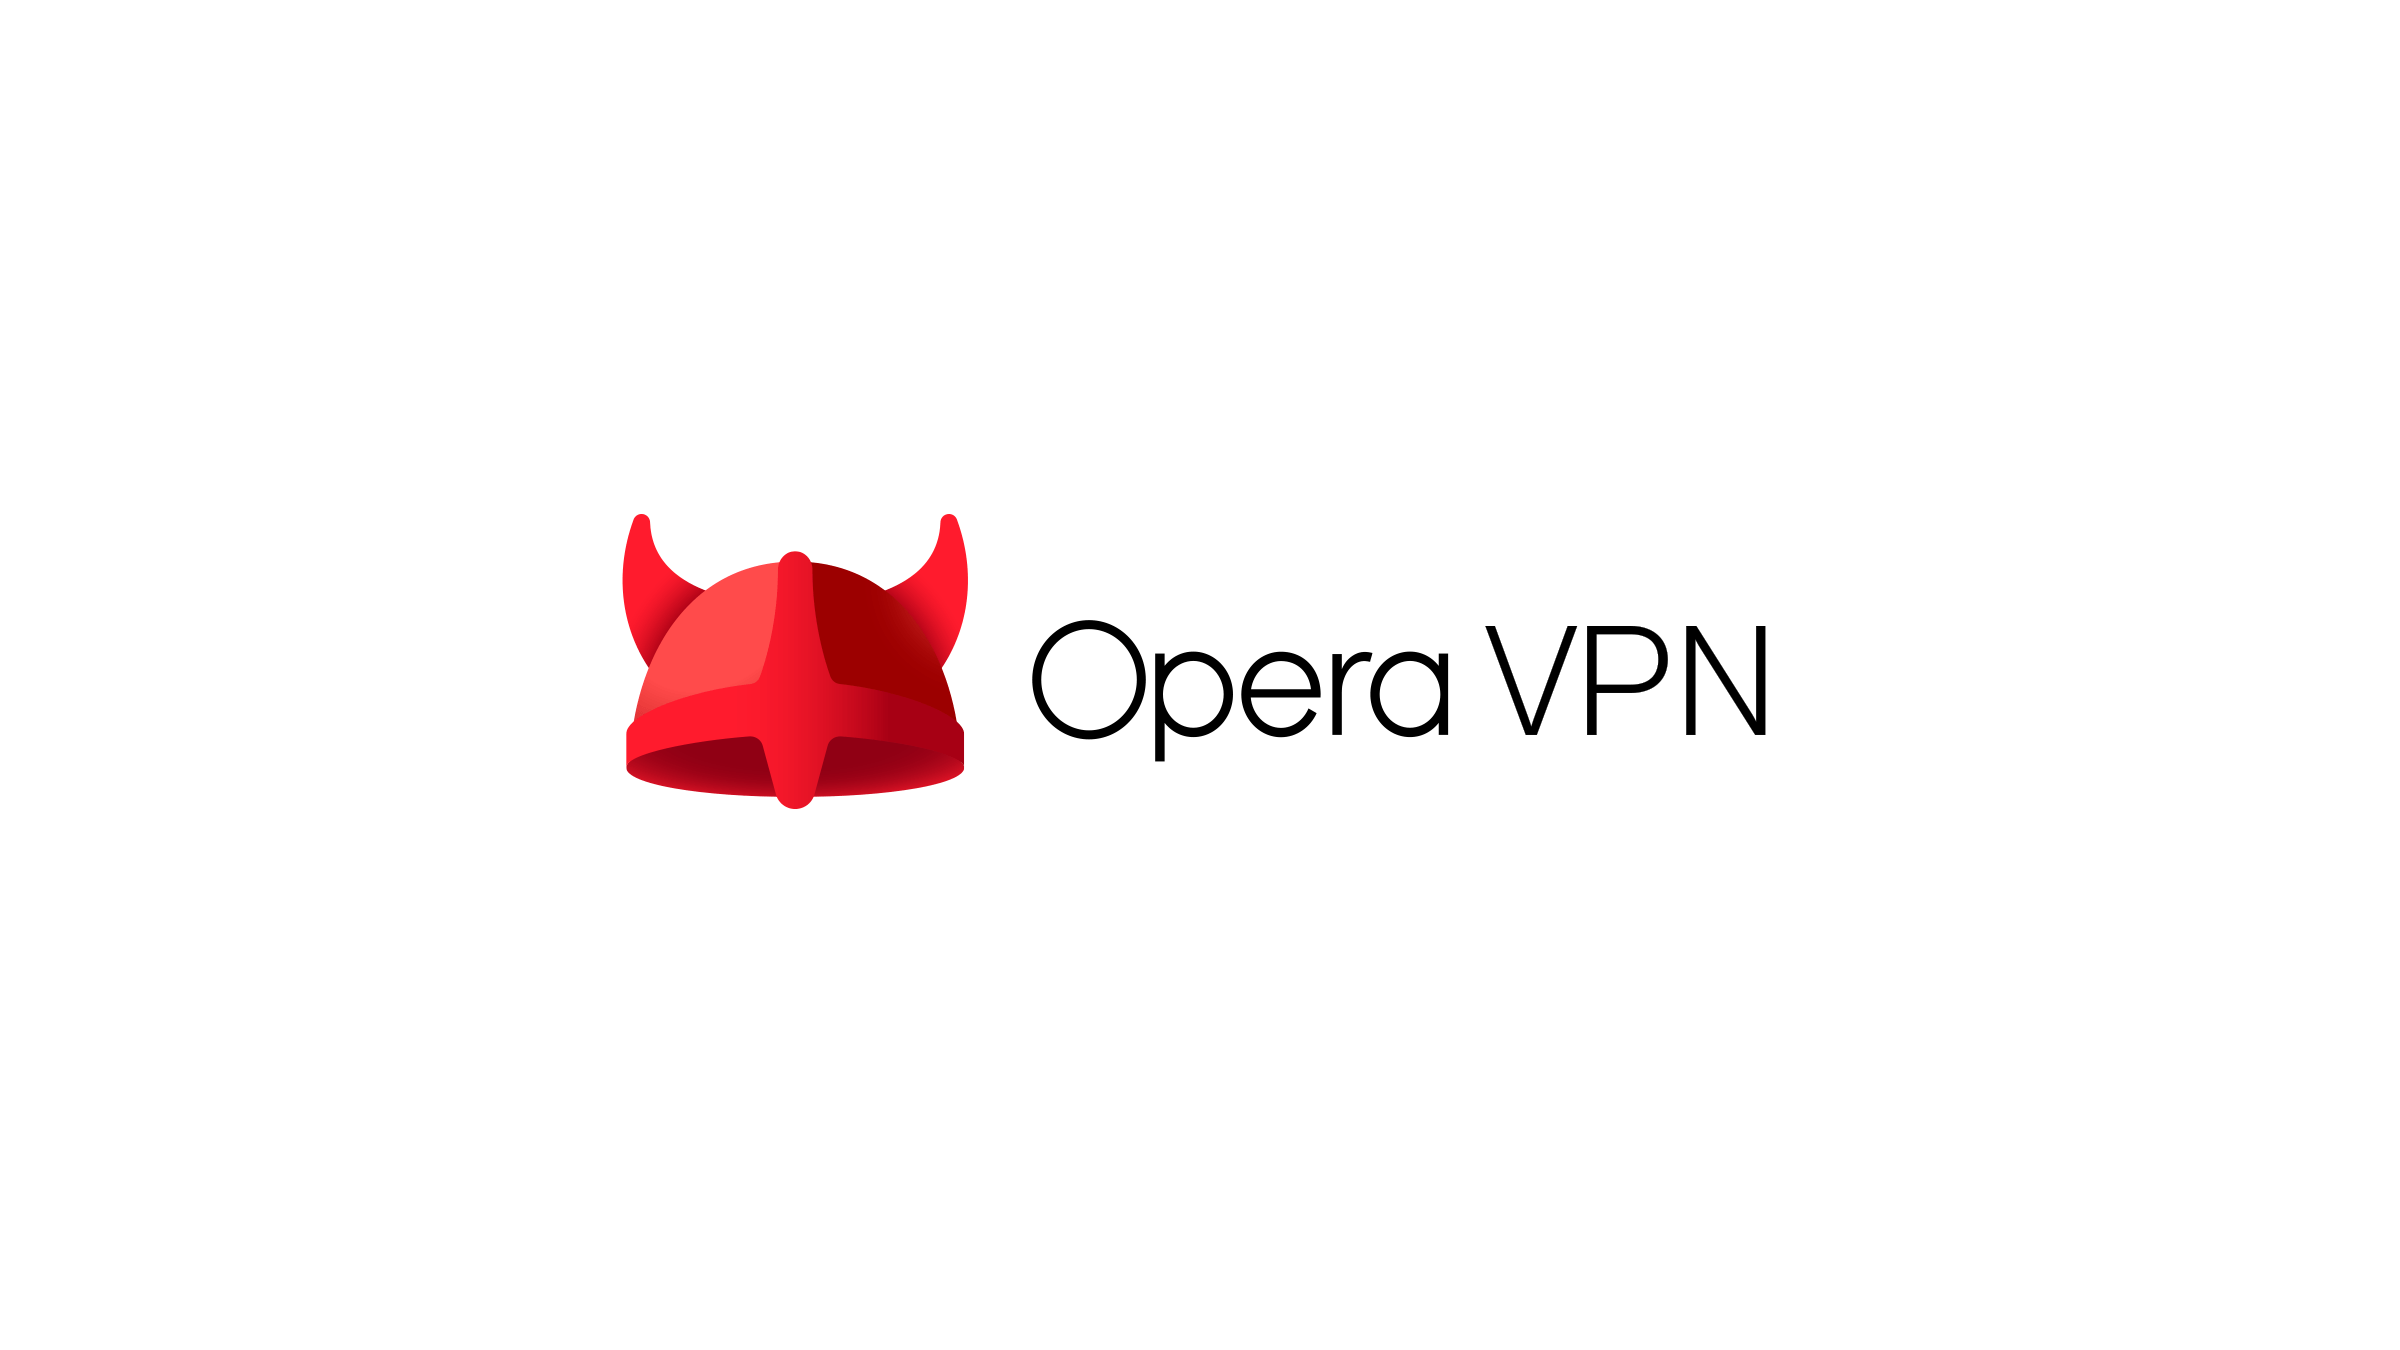 Opera VPN Review 2020: merezi al du?
